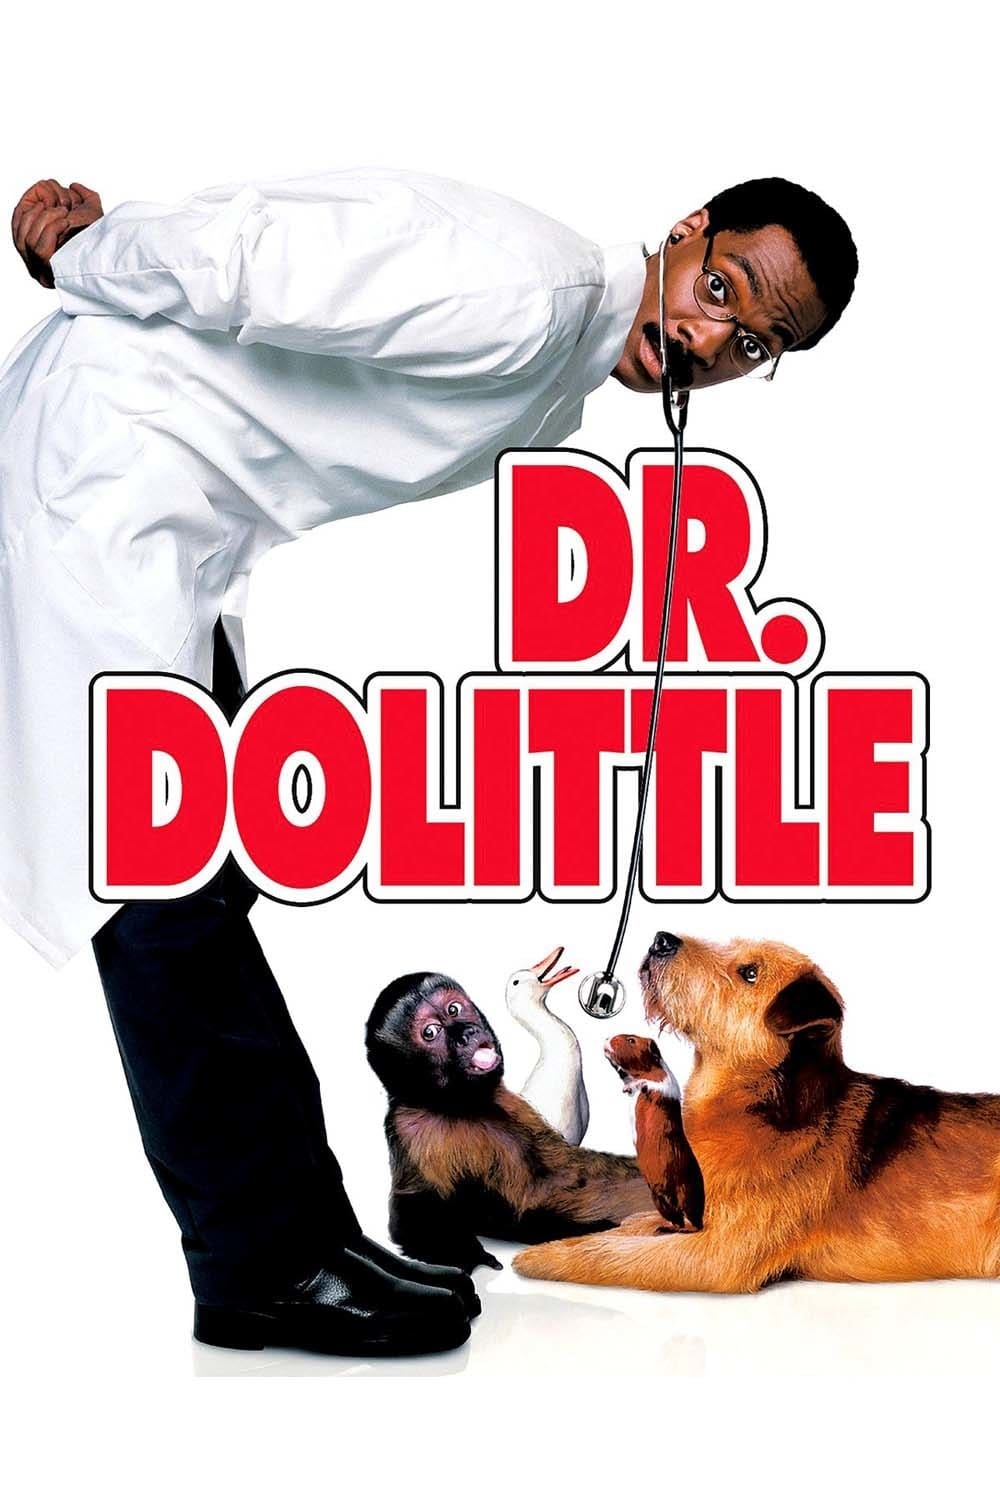 Caratula de DOCTOR DOLITTLE (Dr. Dolittle) 